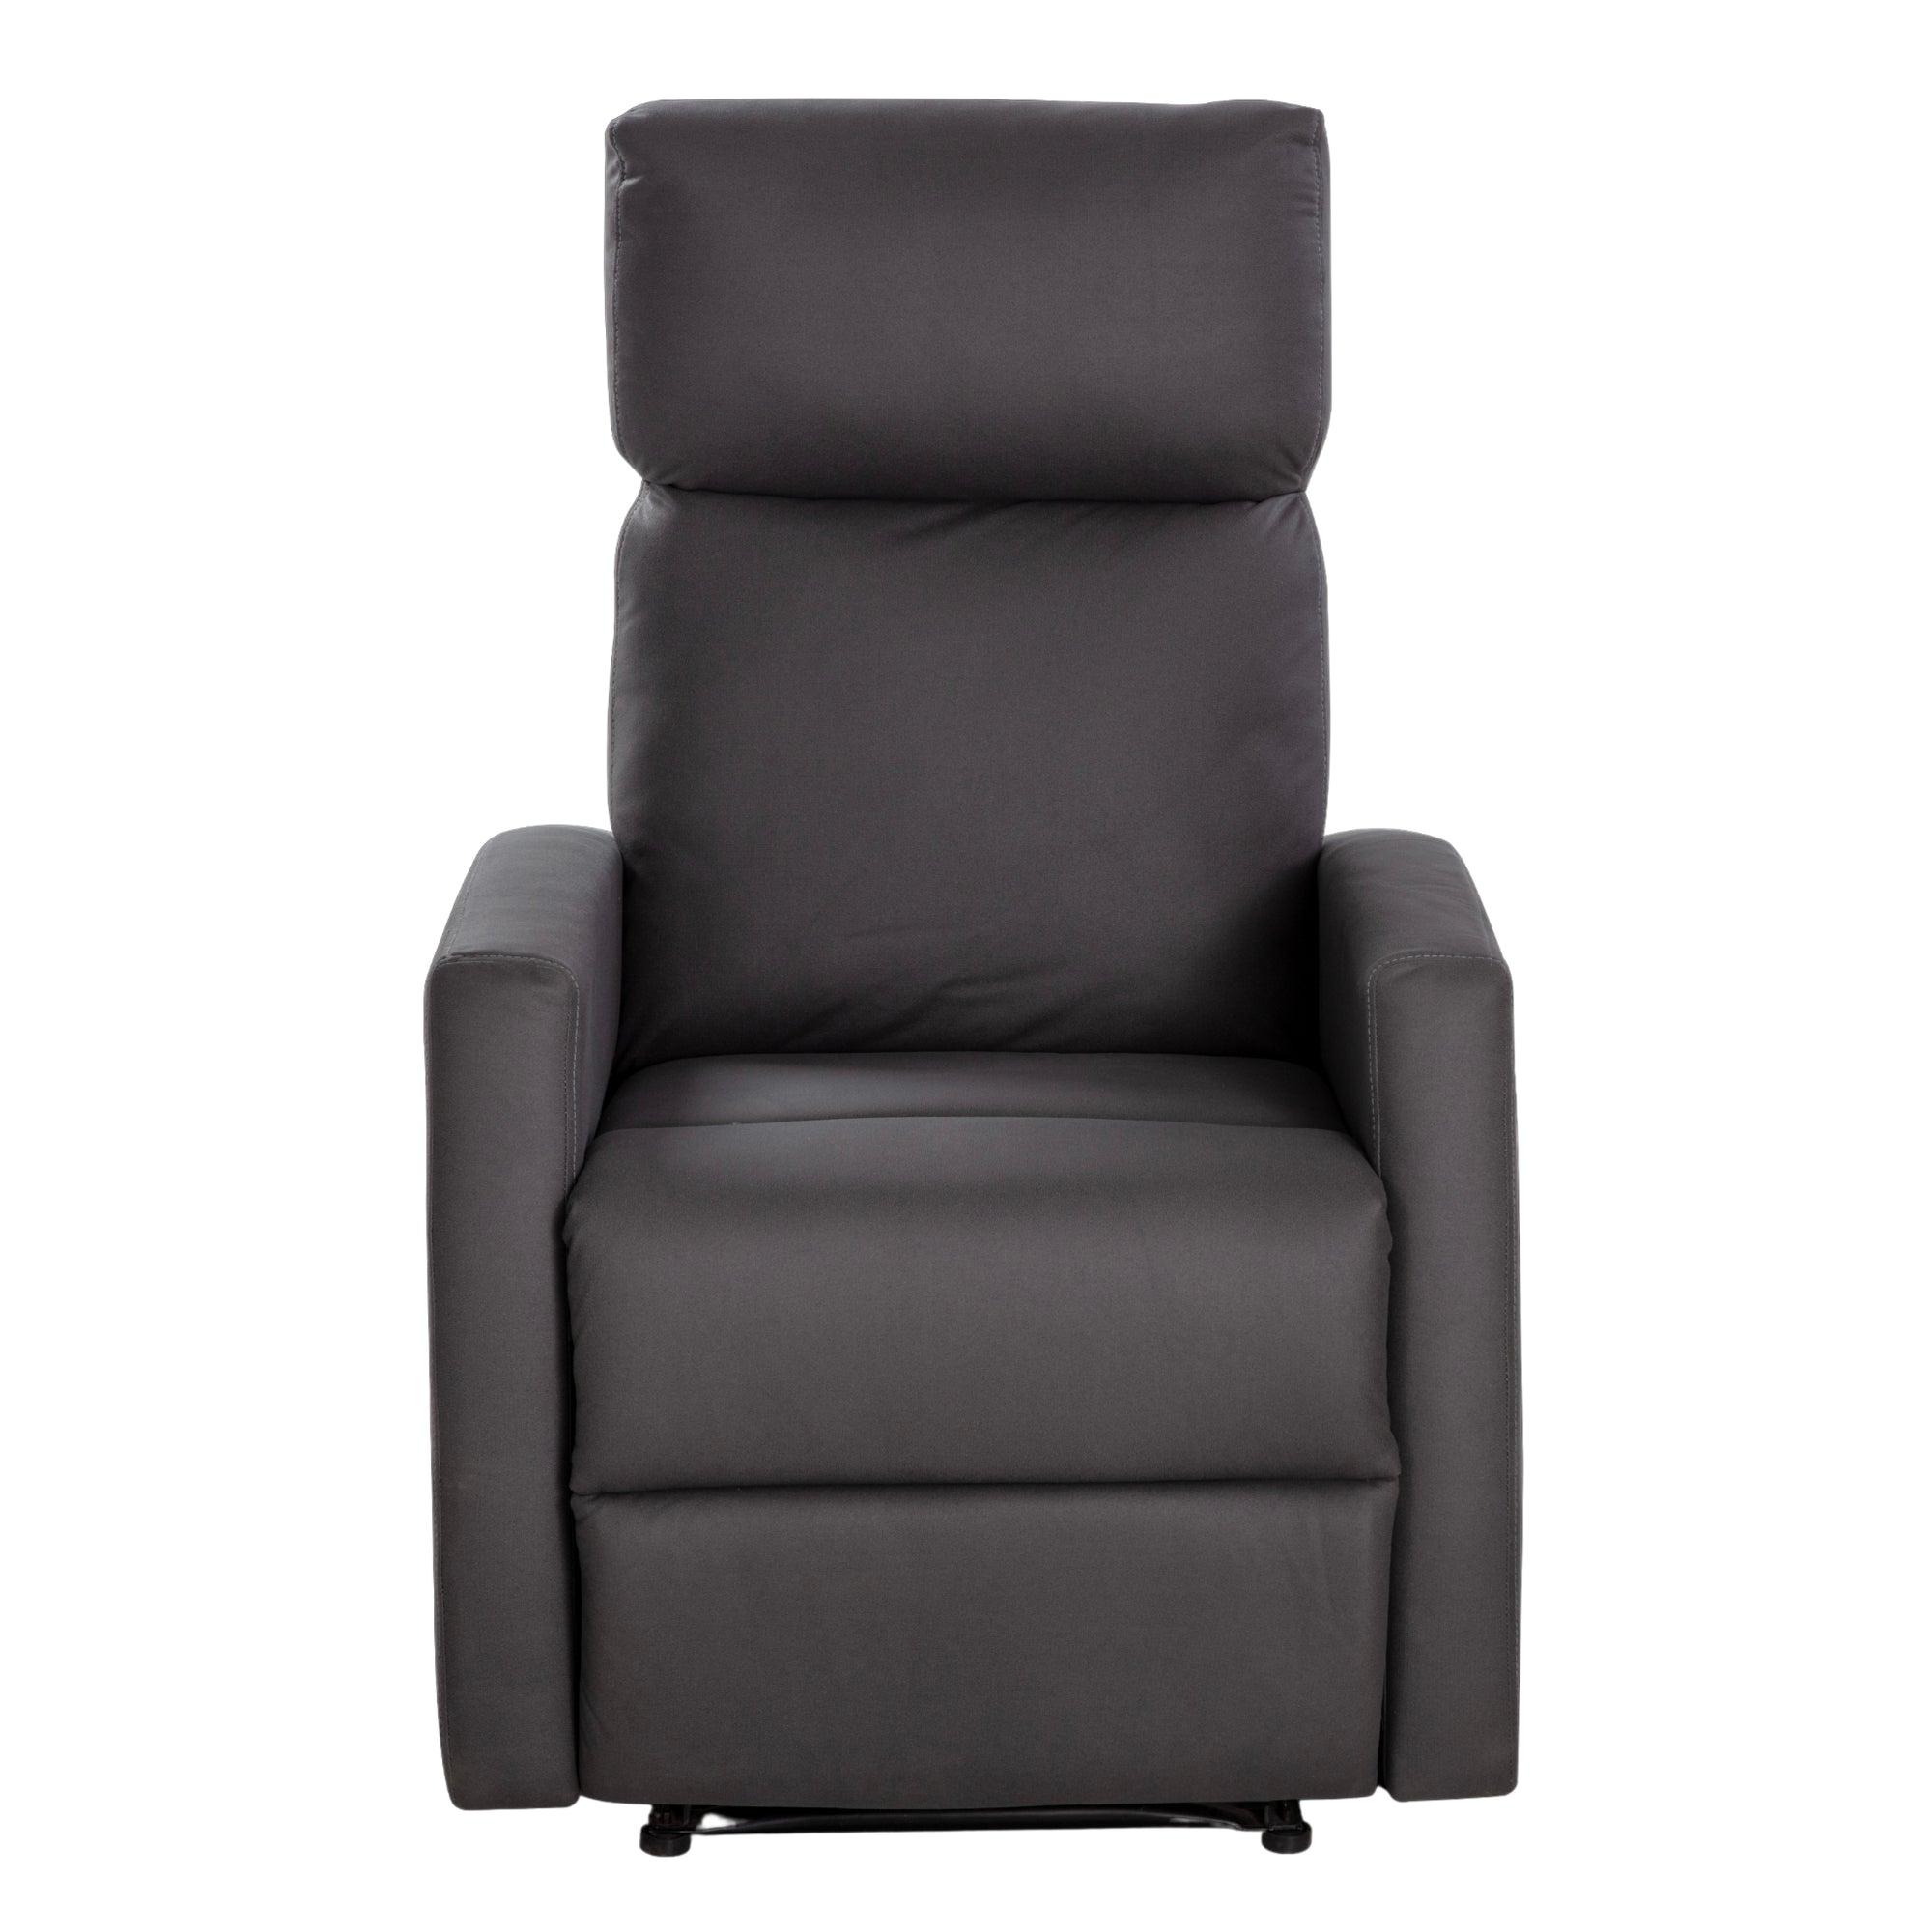 Skylora grey upholstered recliner chair.